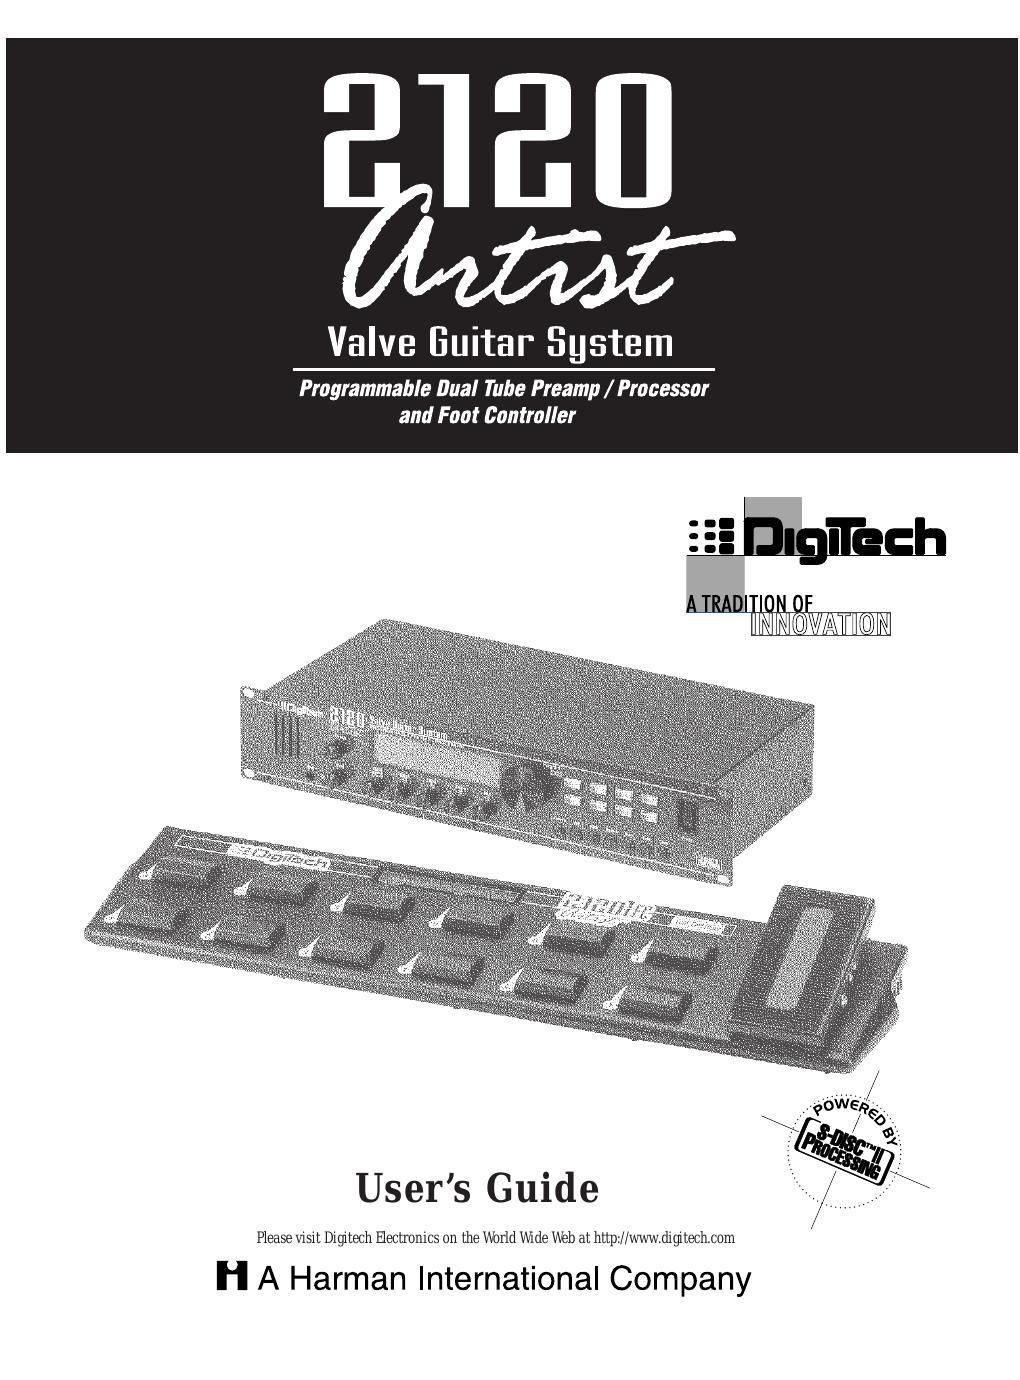 Free Audio Service Manuals - Free download digitech 2120 valve